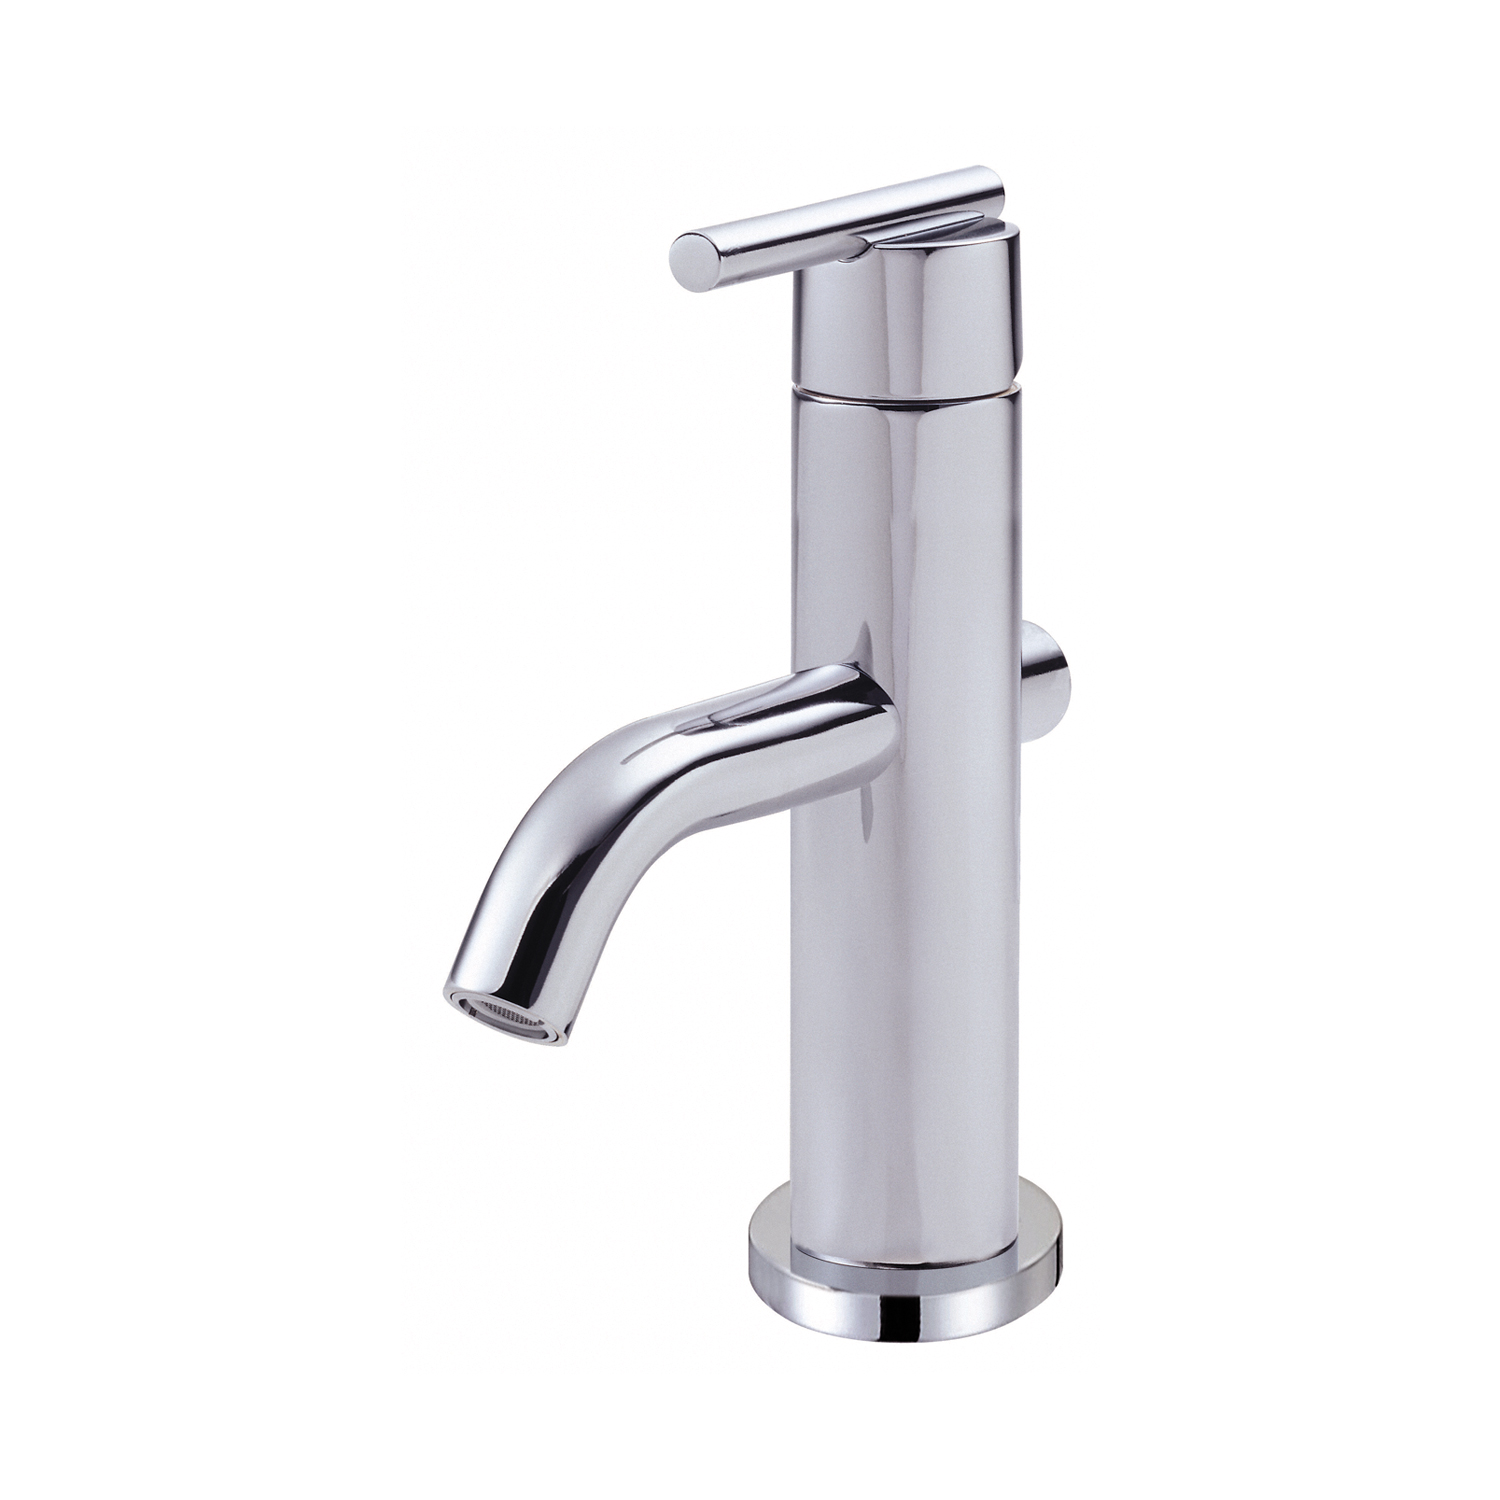 Danze D236158 Parma 1H Lavatory Faucet w/ Metal Touch Down Drain & Optional Deck Plate Included - Chrome